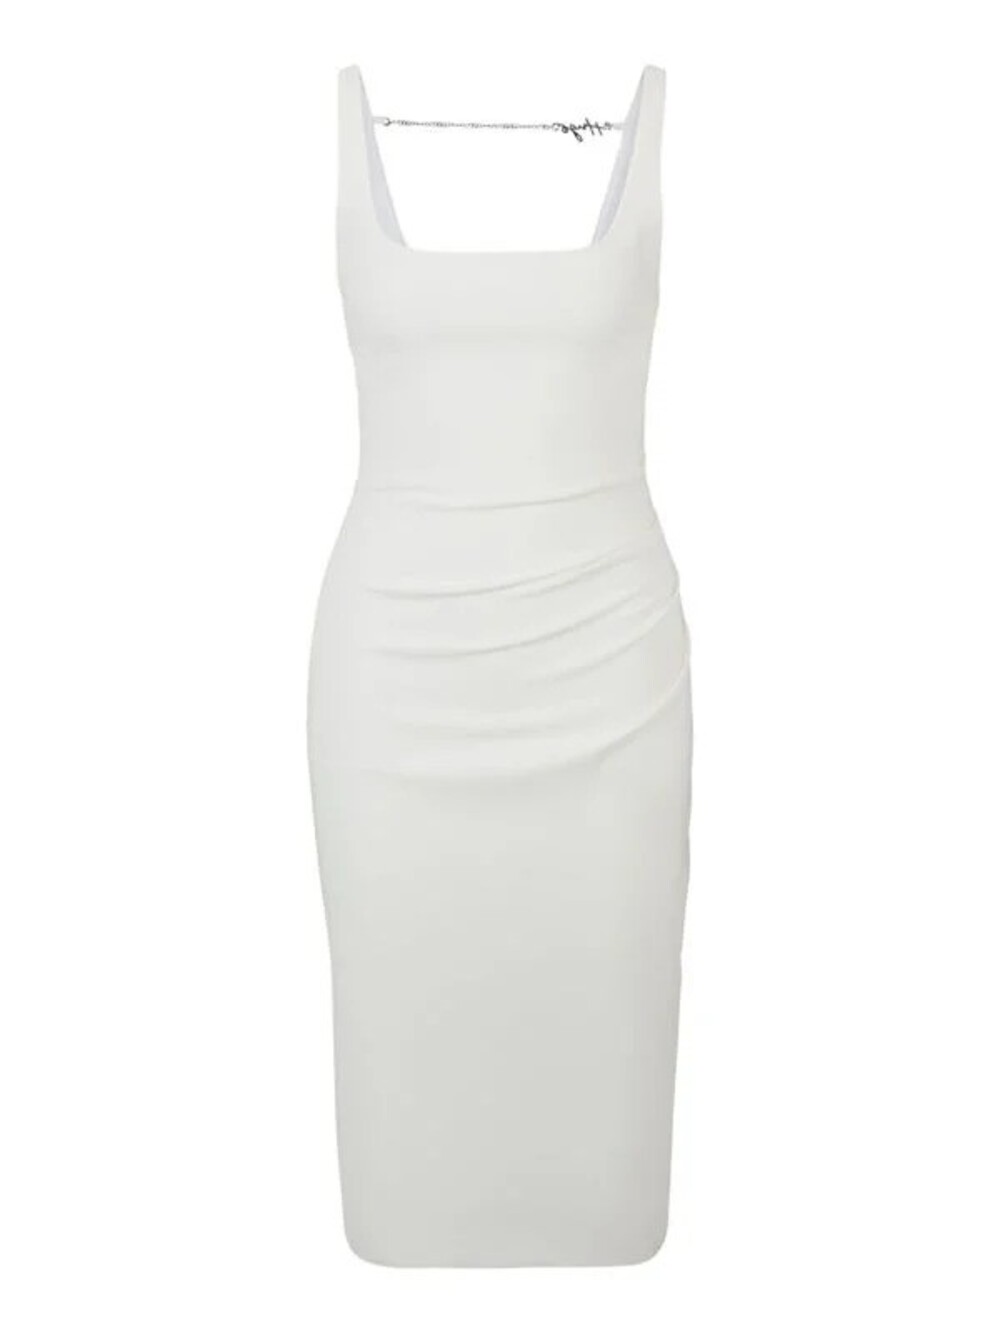 b7 ezgif.com webp to jpg converter Spring in White: 10 modnih komada bele boje koje obožavamo ove sezone